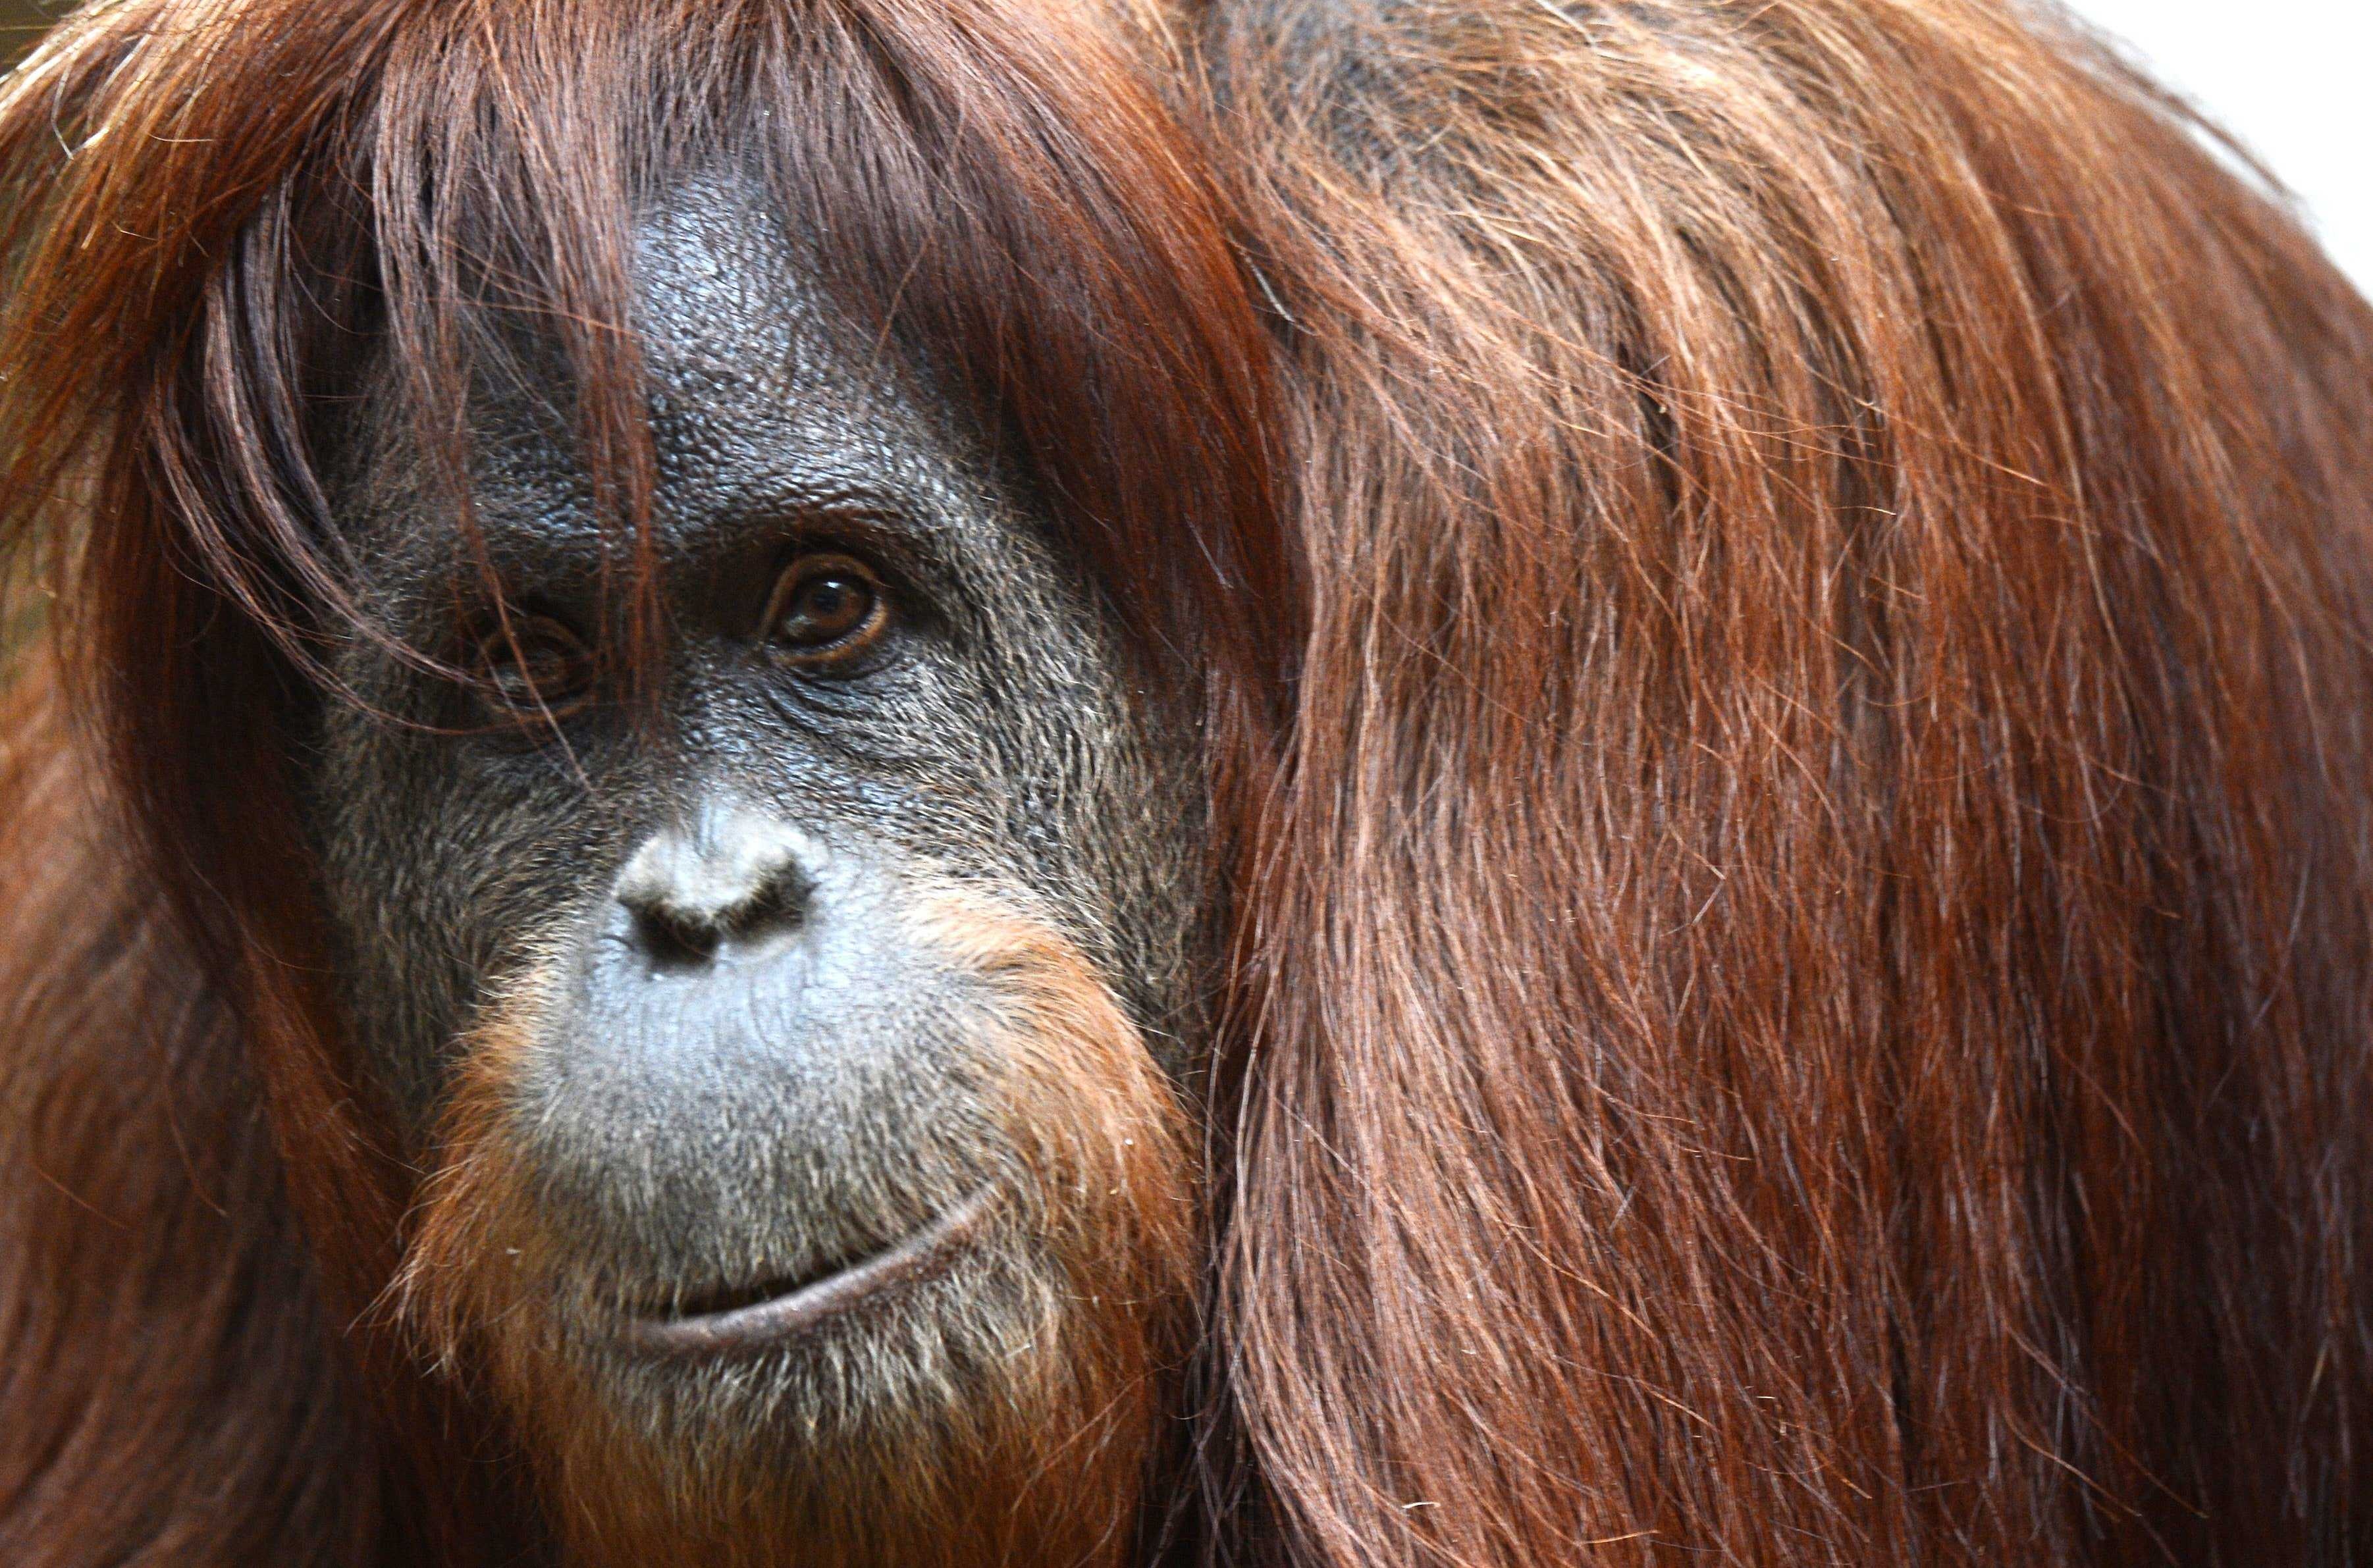 image of orangutan